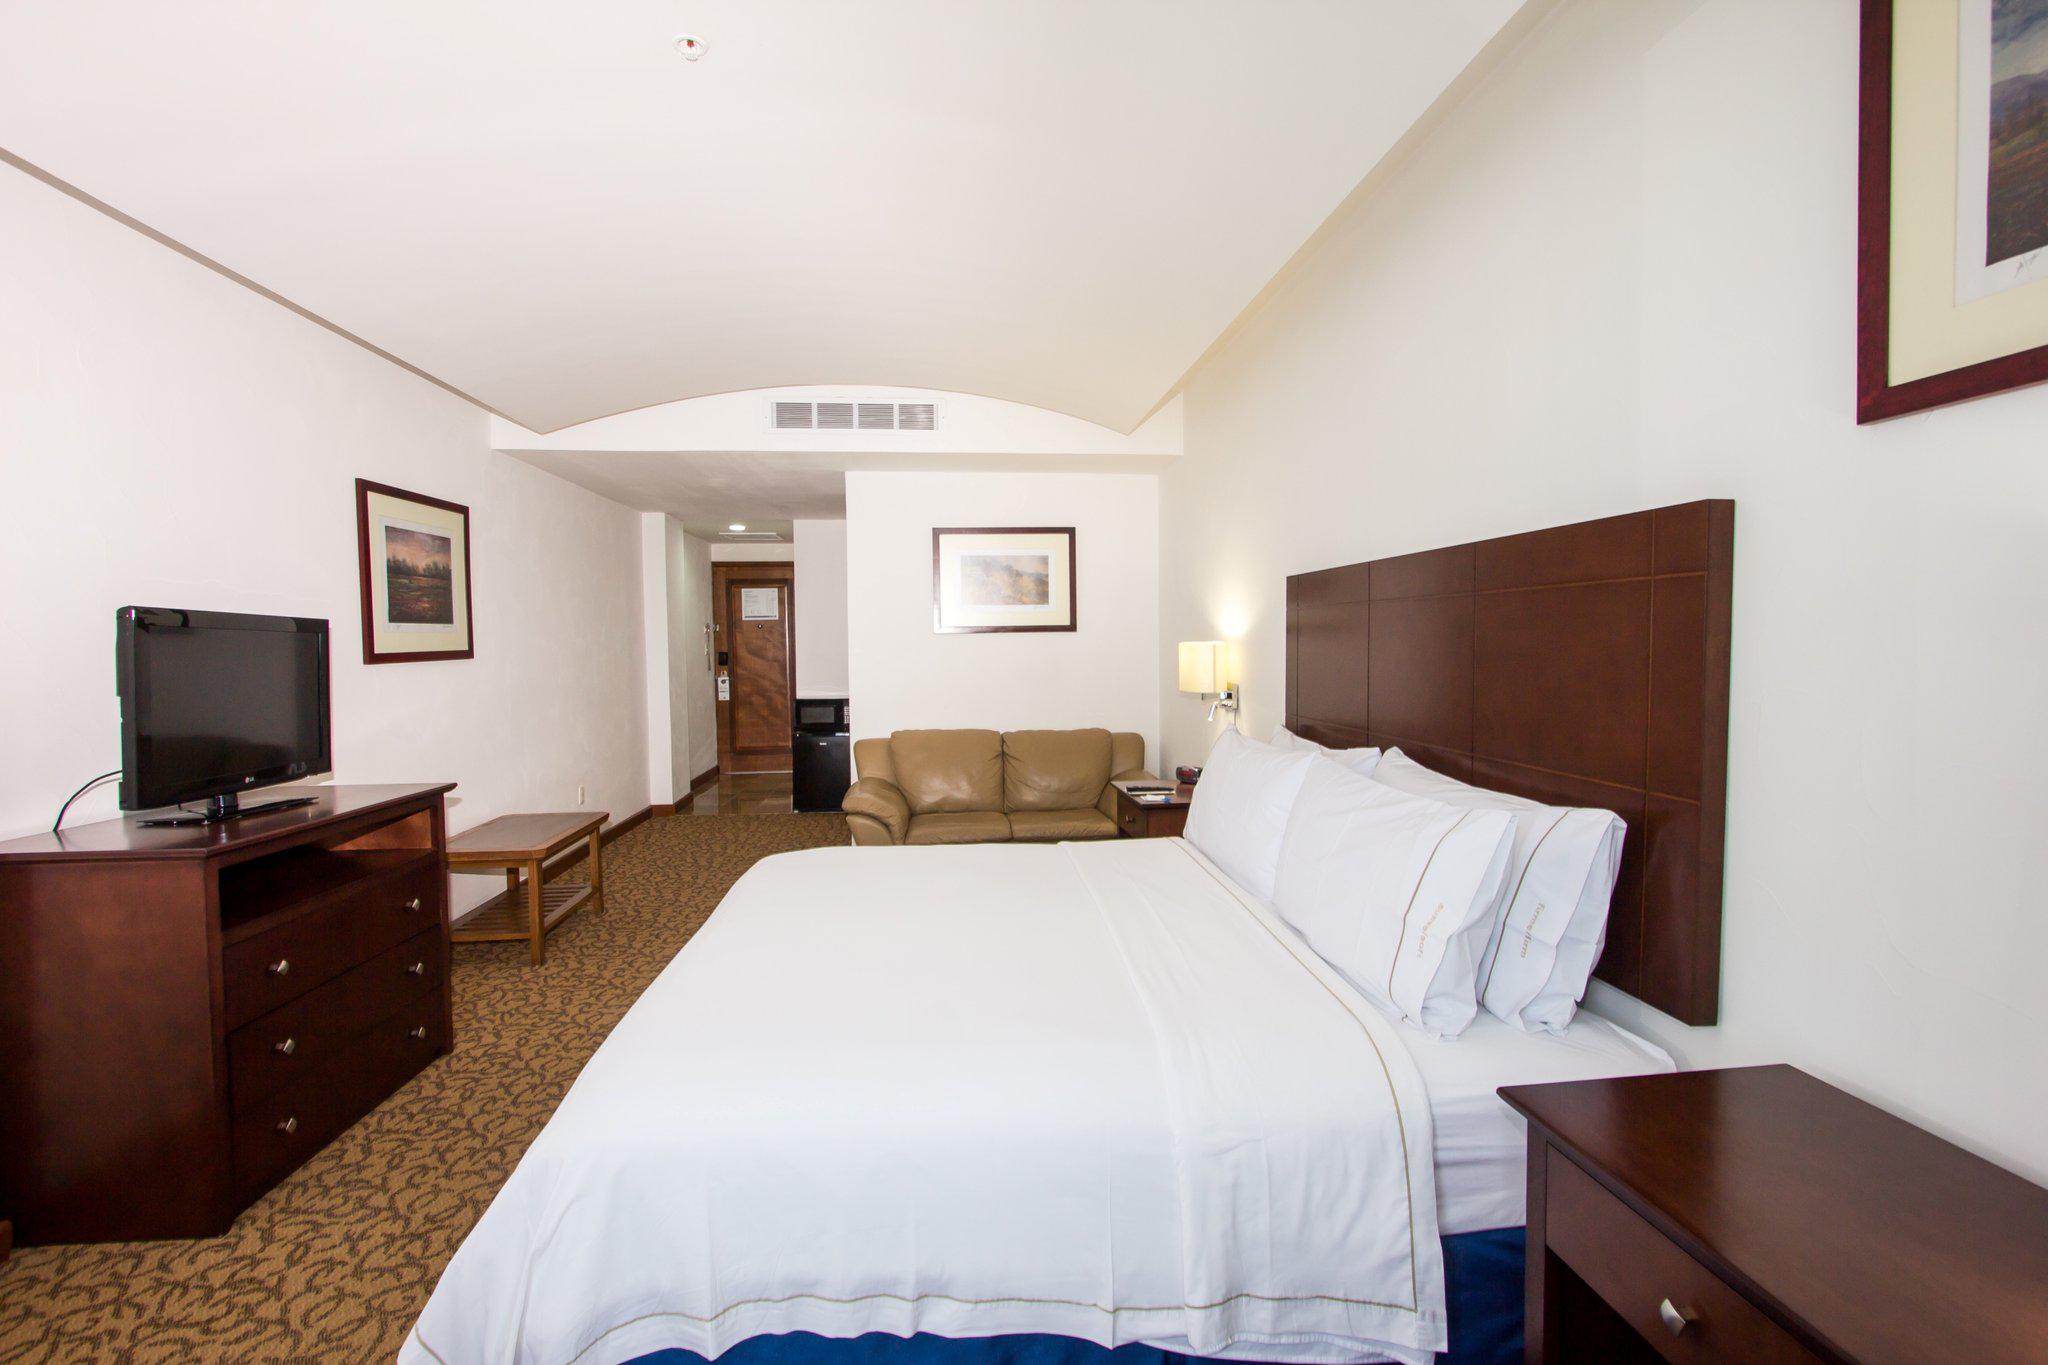 Images Holiday Inn Express Nuevo Laredo, an IHG Hotel